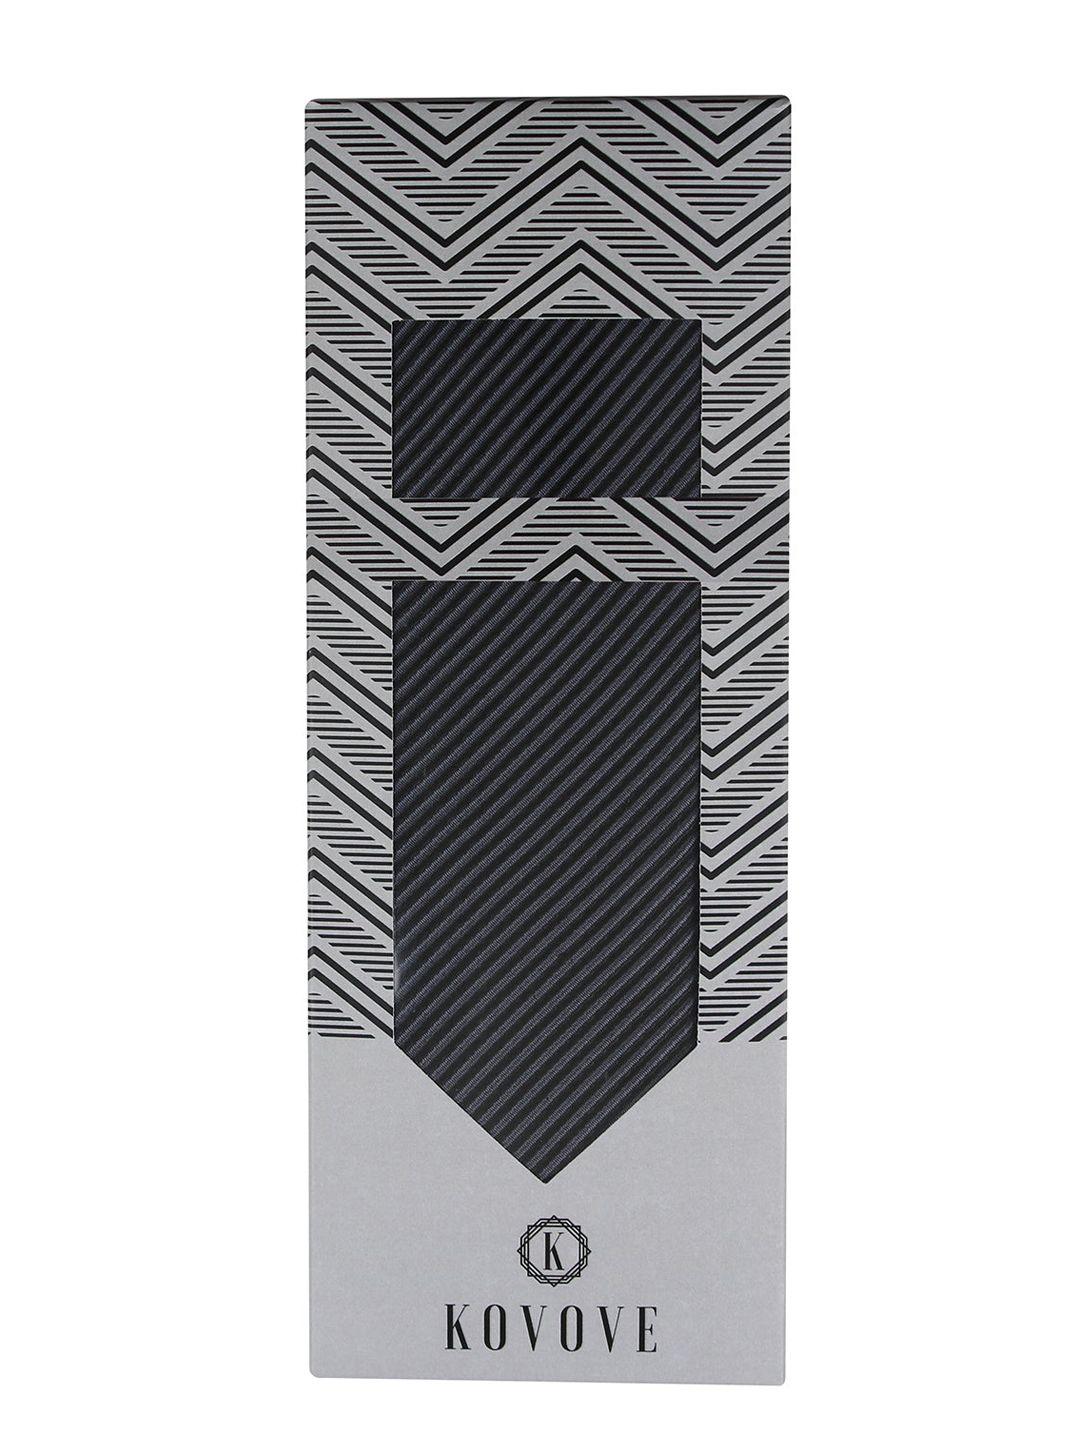 kovove black striped accessory gift set